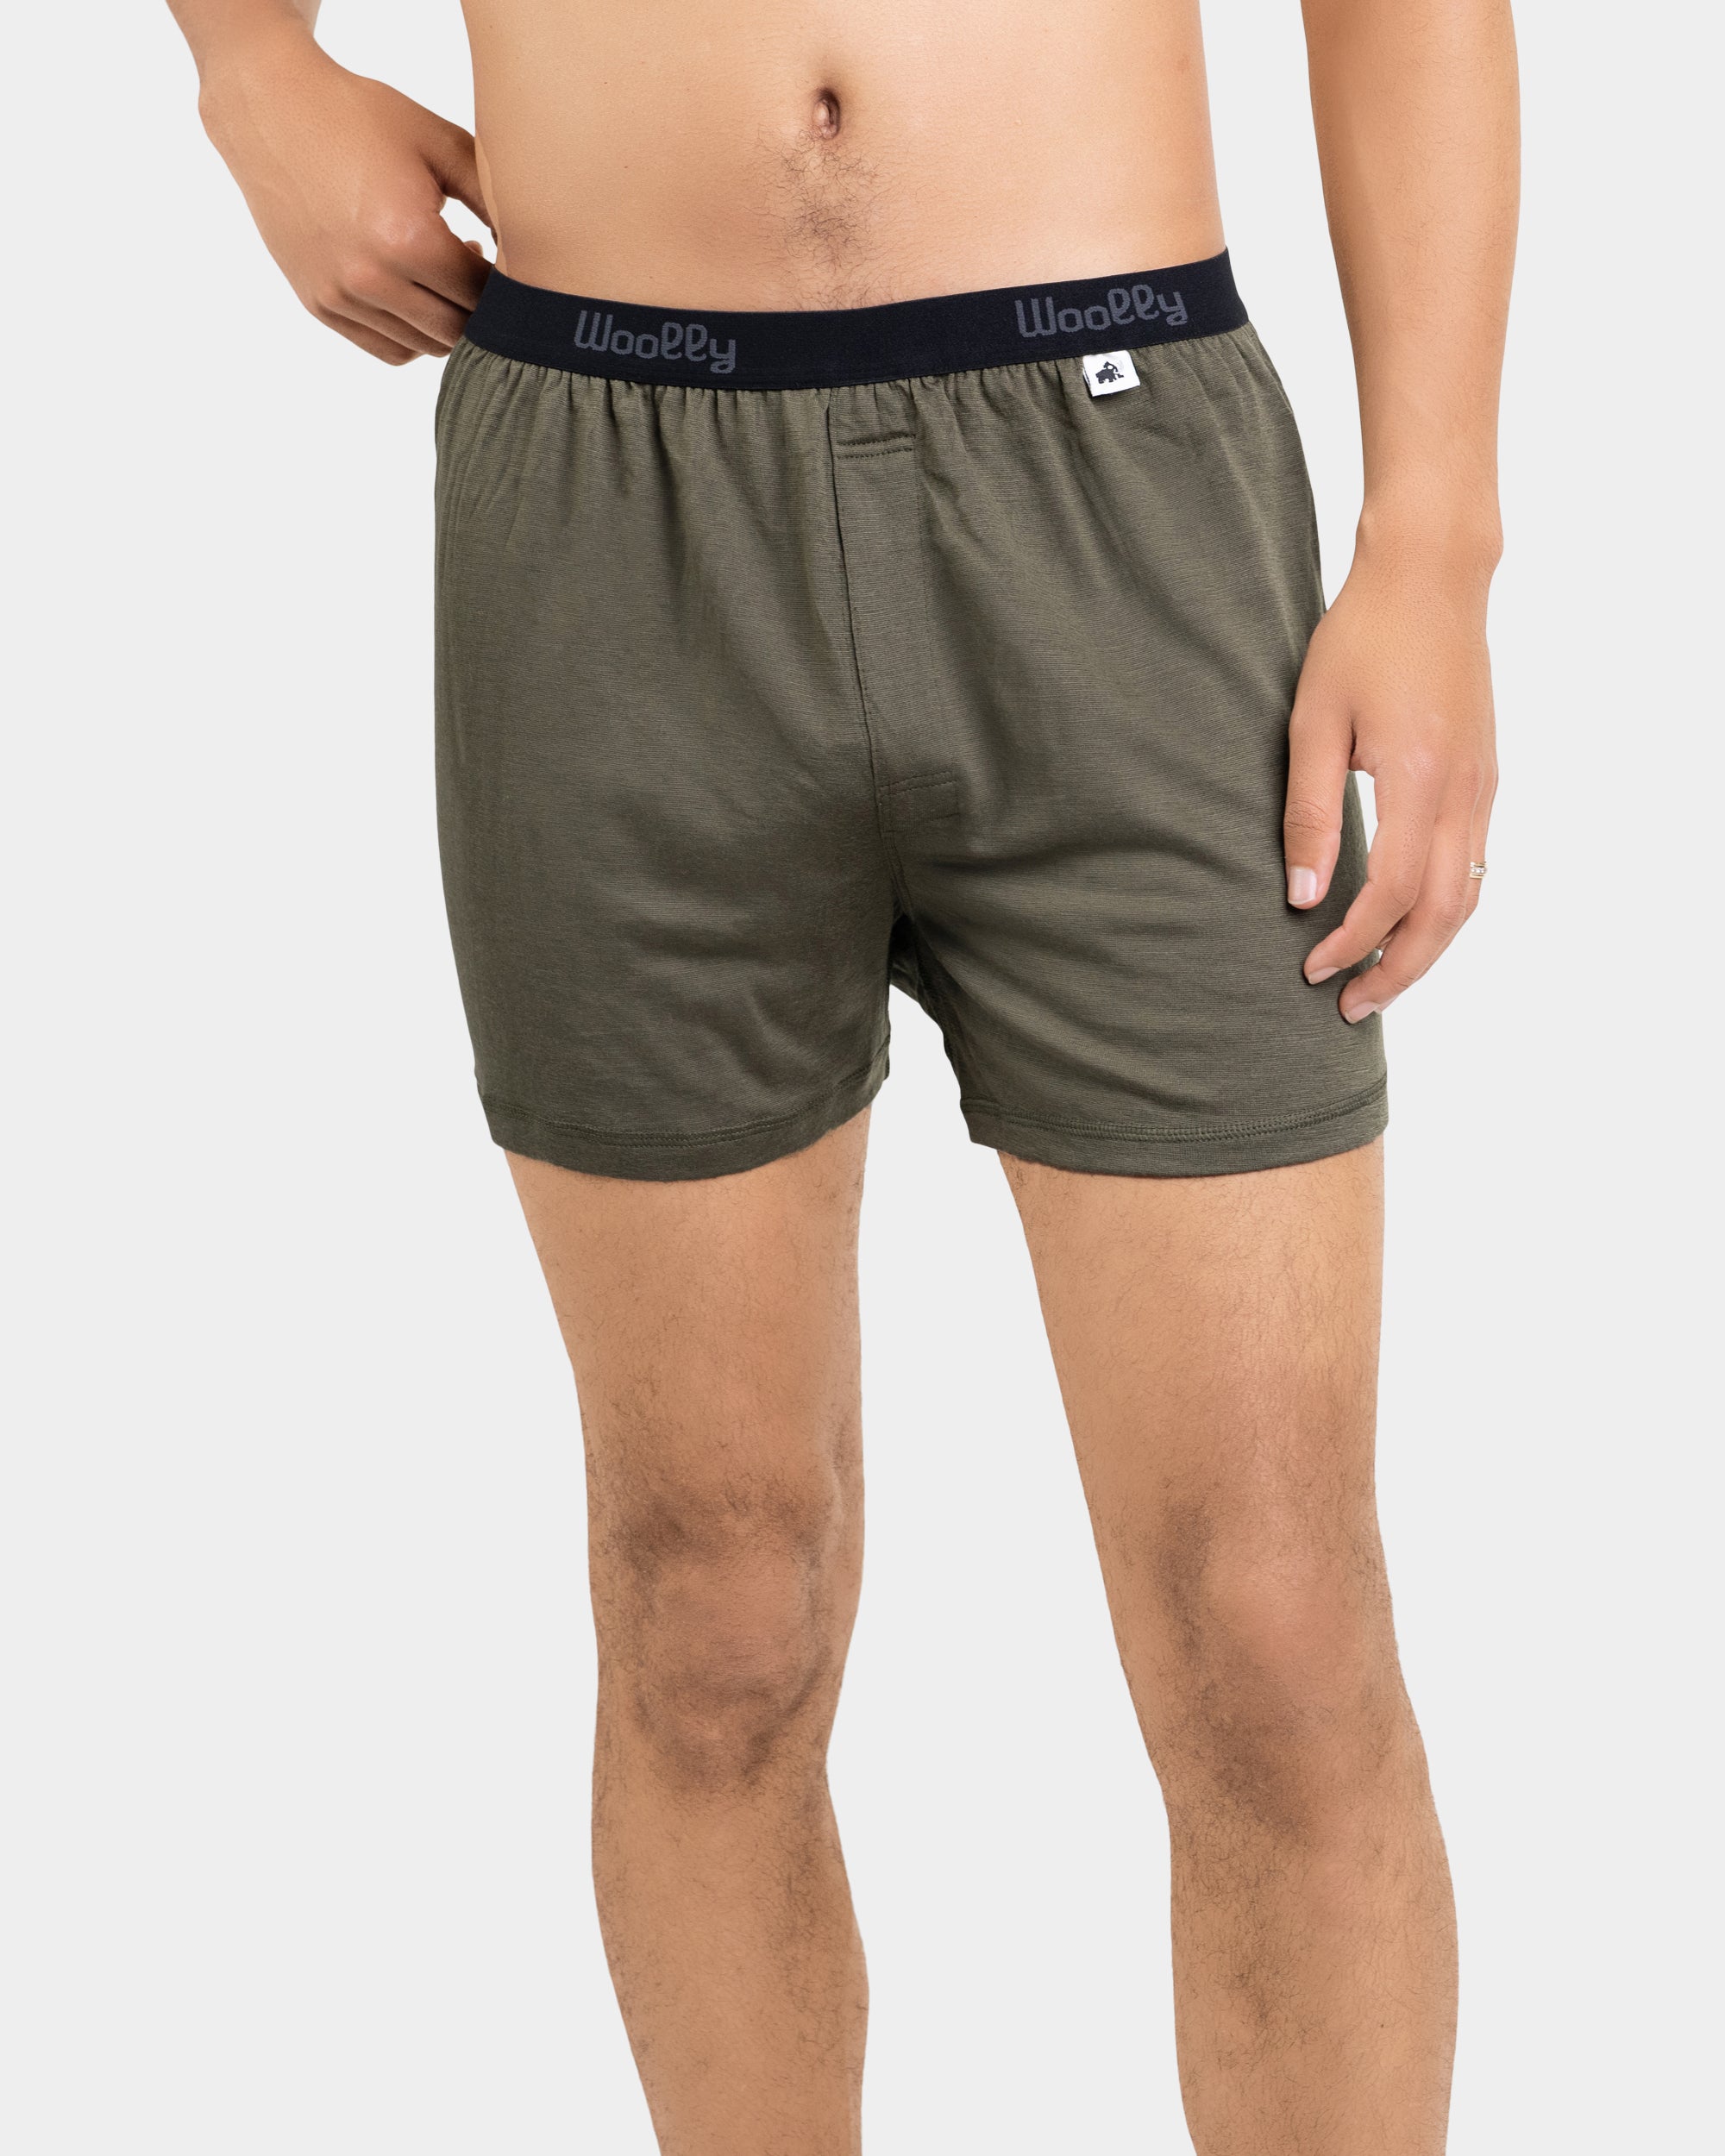 Cotton Boxer-style Shorts